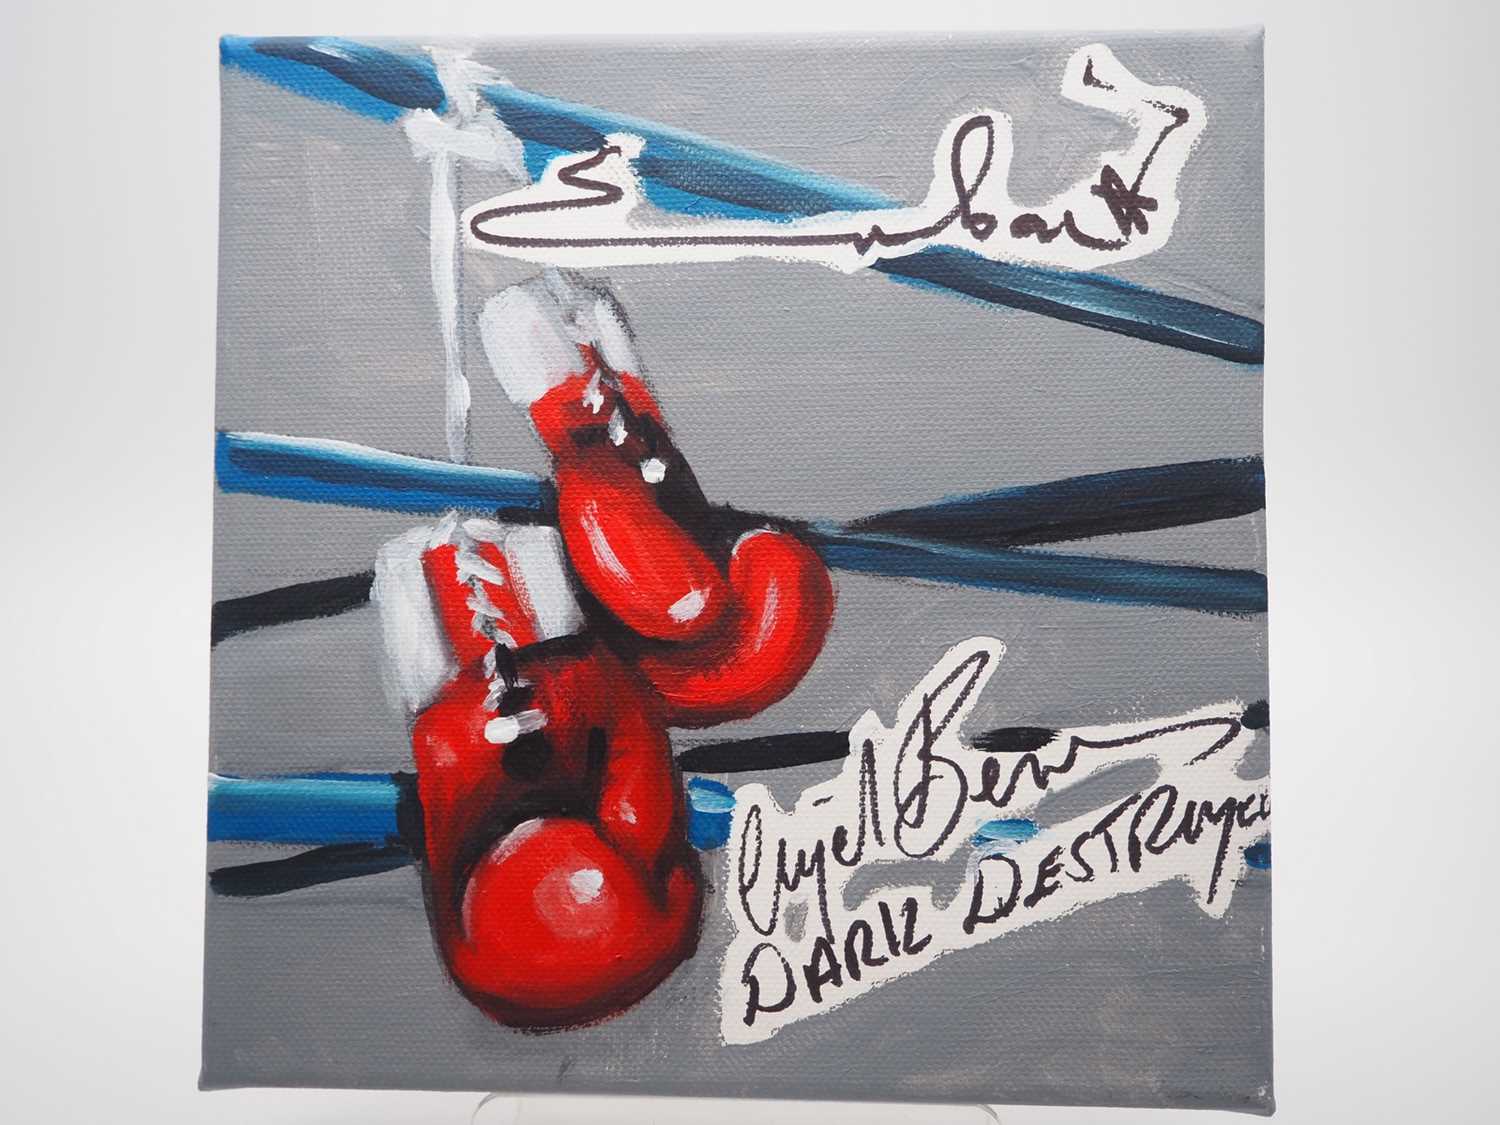 Chris Eubank and Nigel Benn - Boxing Gloves artwork added by Dhanraz Ramdharry - 8" x 8" -